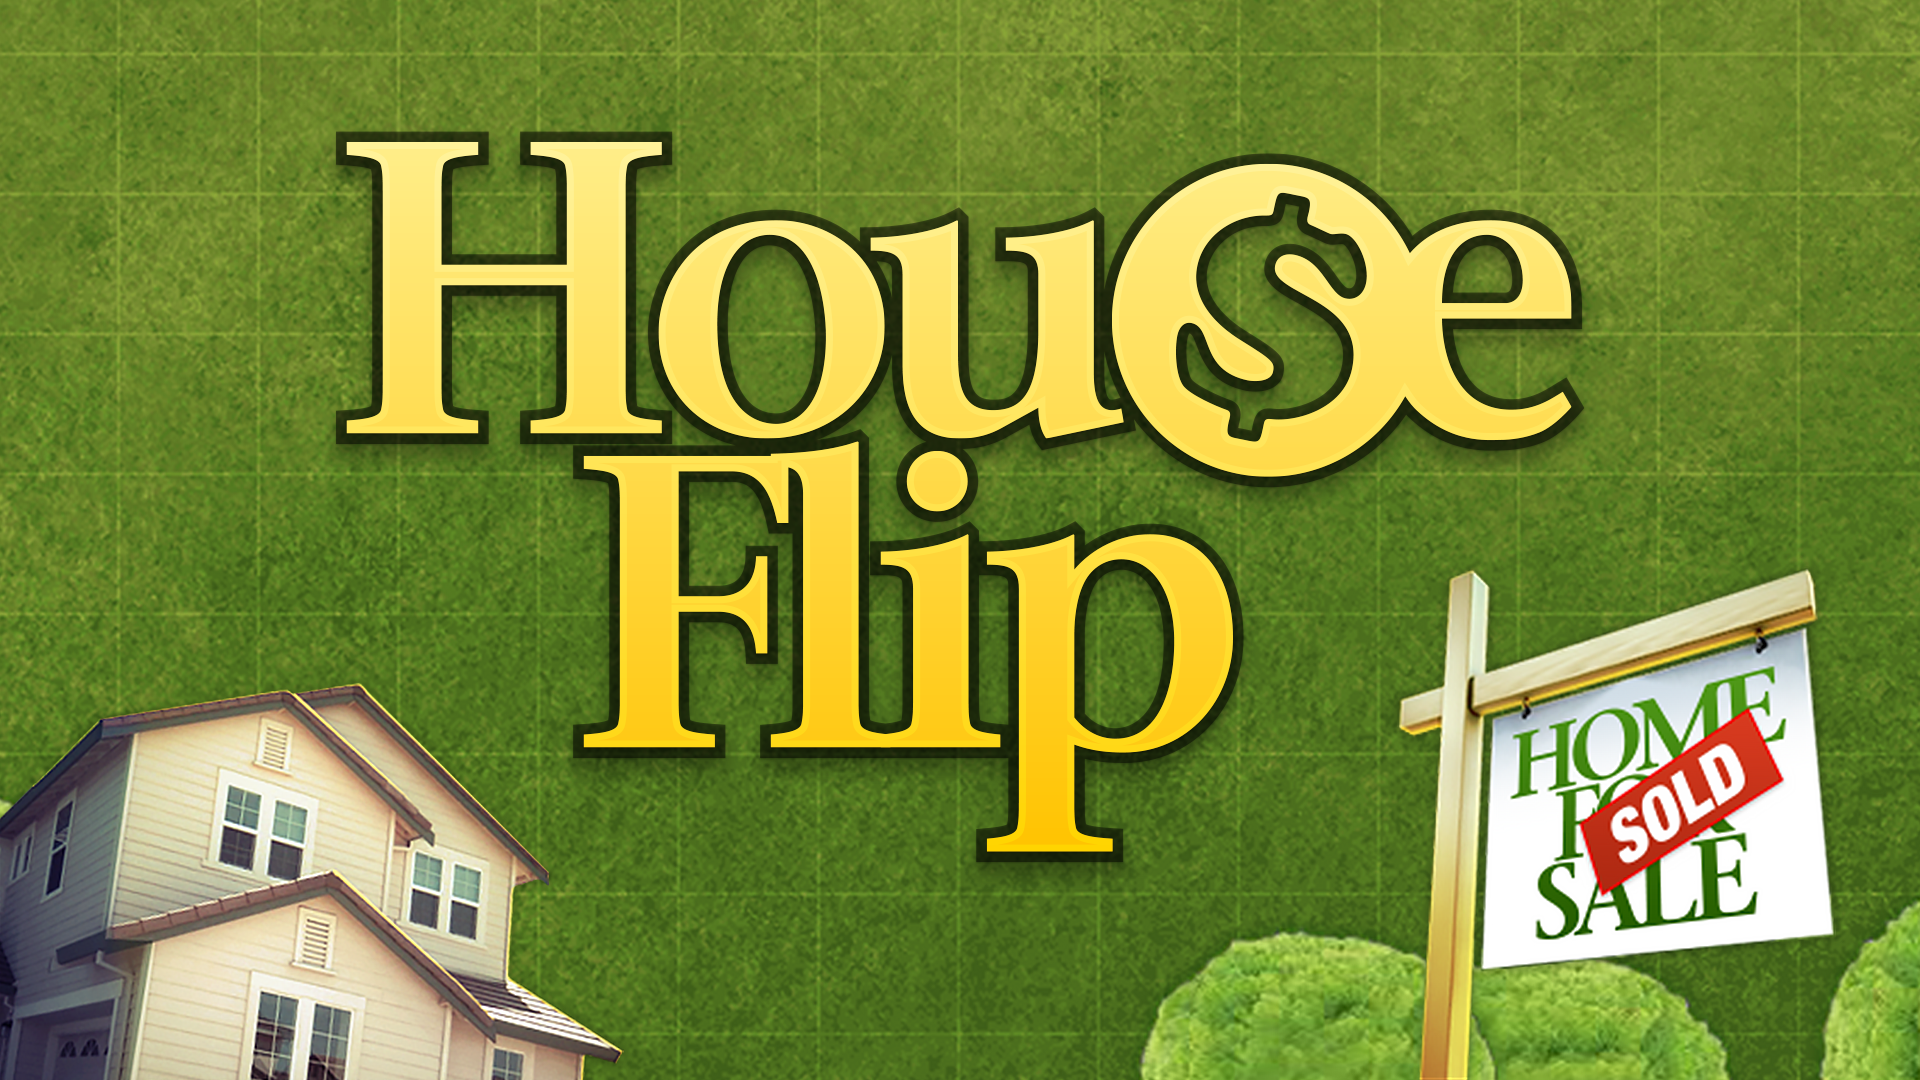 House Flip Game Image